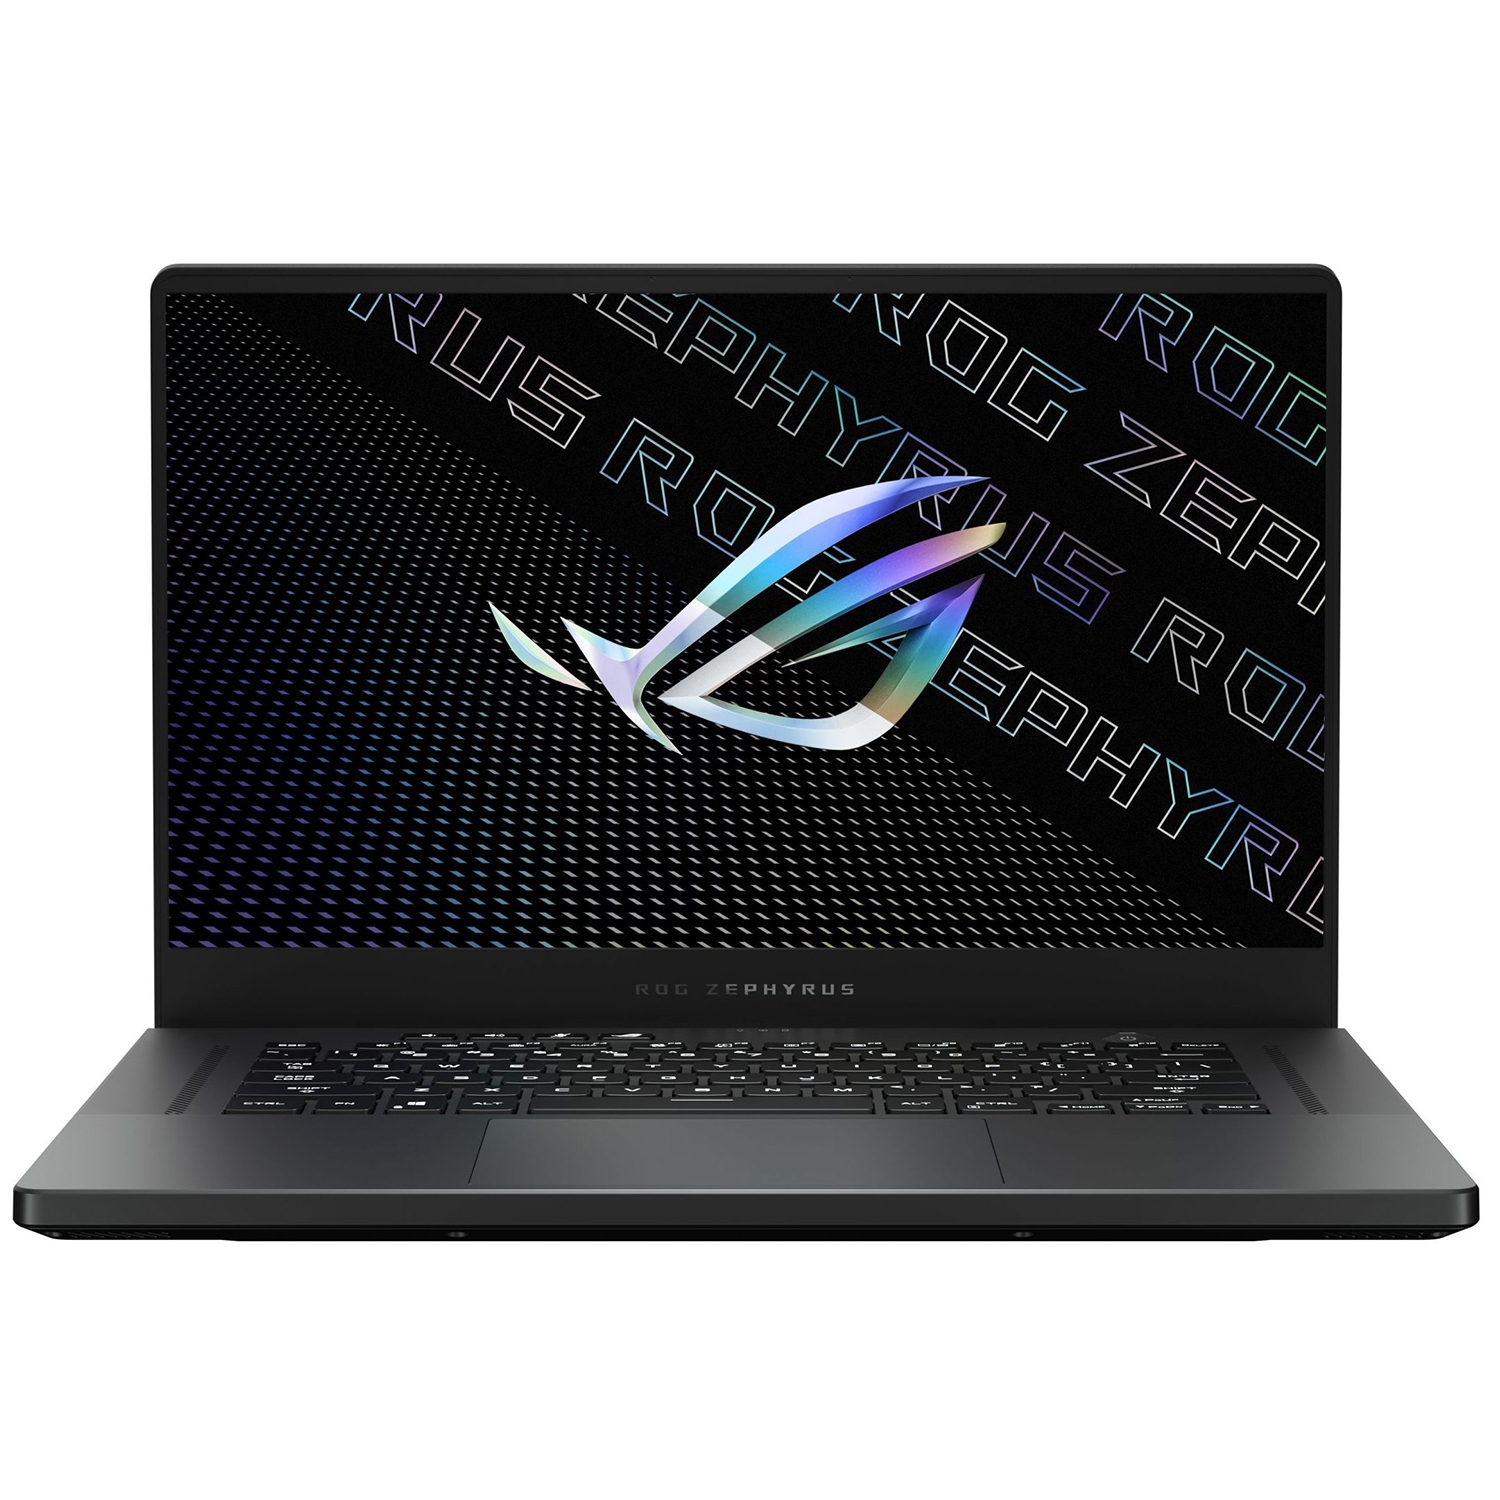 Custom ASUS ROG Zephyrus G15 Laptop (AMD Ryzen 9 5900HS, 40GB RAM, 2TB PCIe SSD, NVIDIA RTX 3060, Win 10 Home)